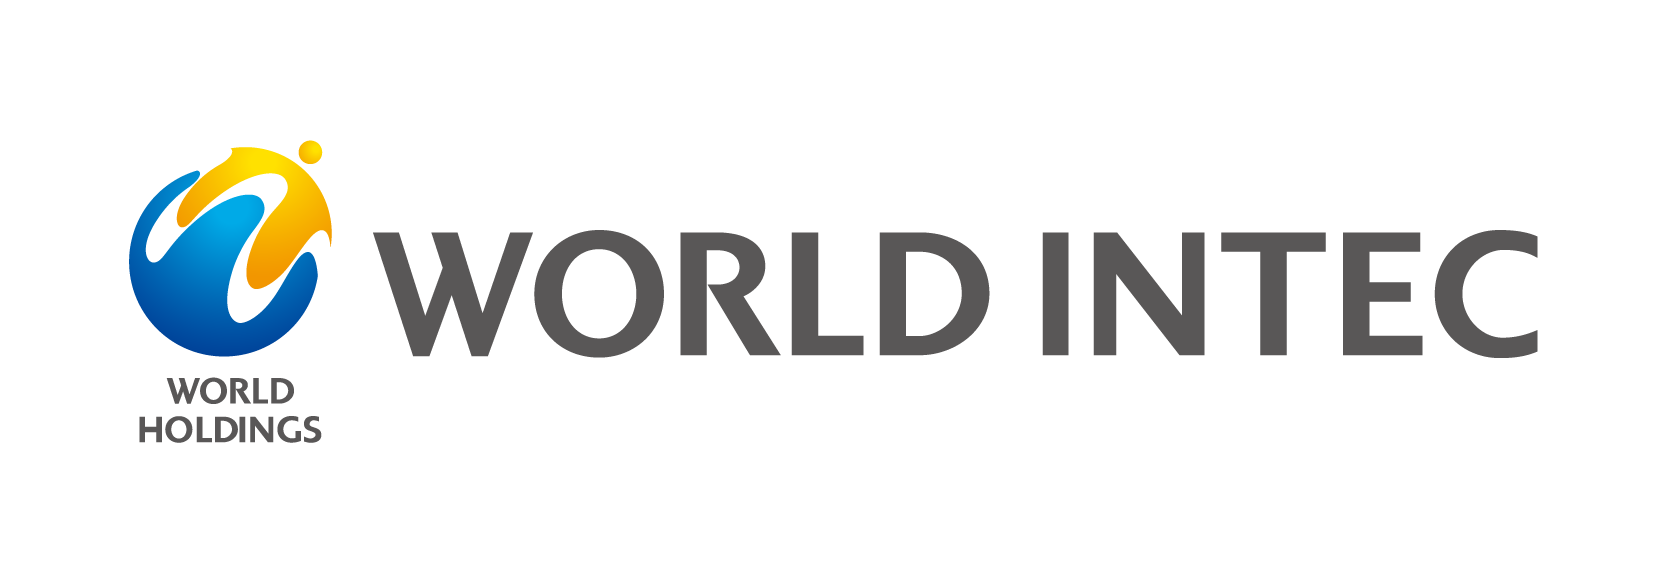 WORLD INTEC CO., LTD.